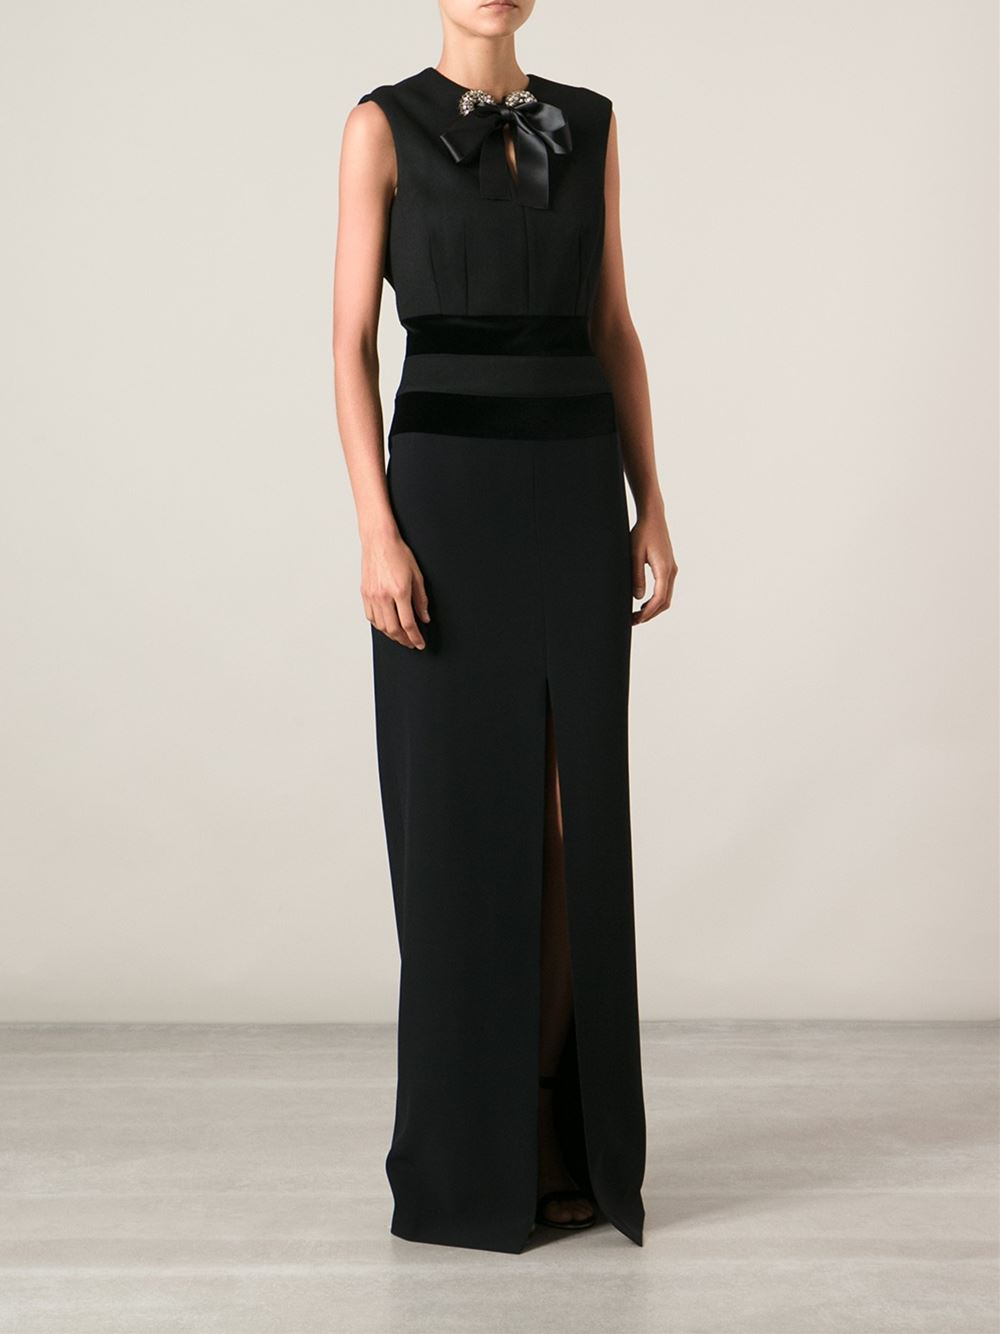 Lyst - Alexander mcqueen Bow Embellished Evening Dress in Black